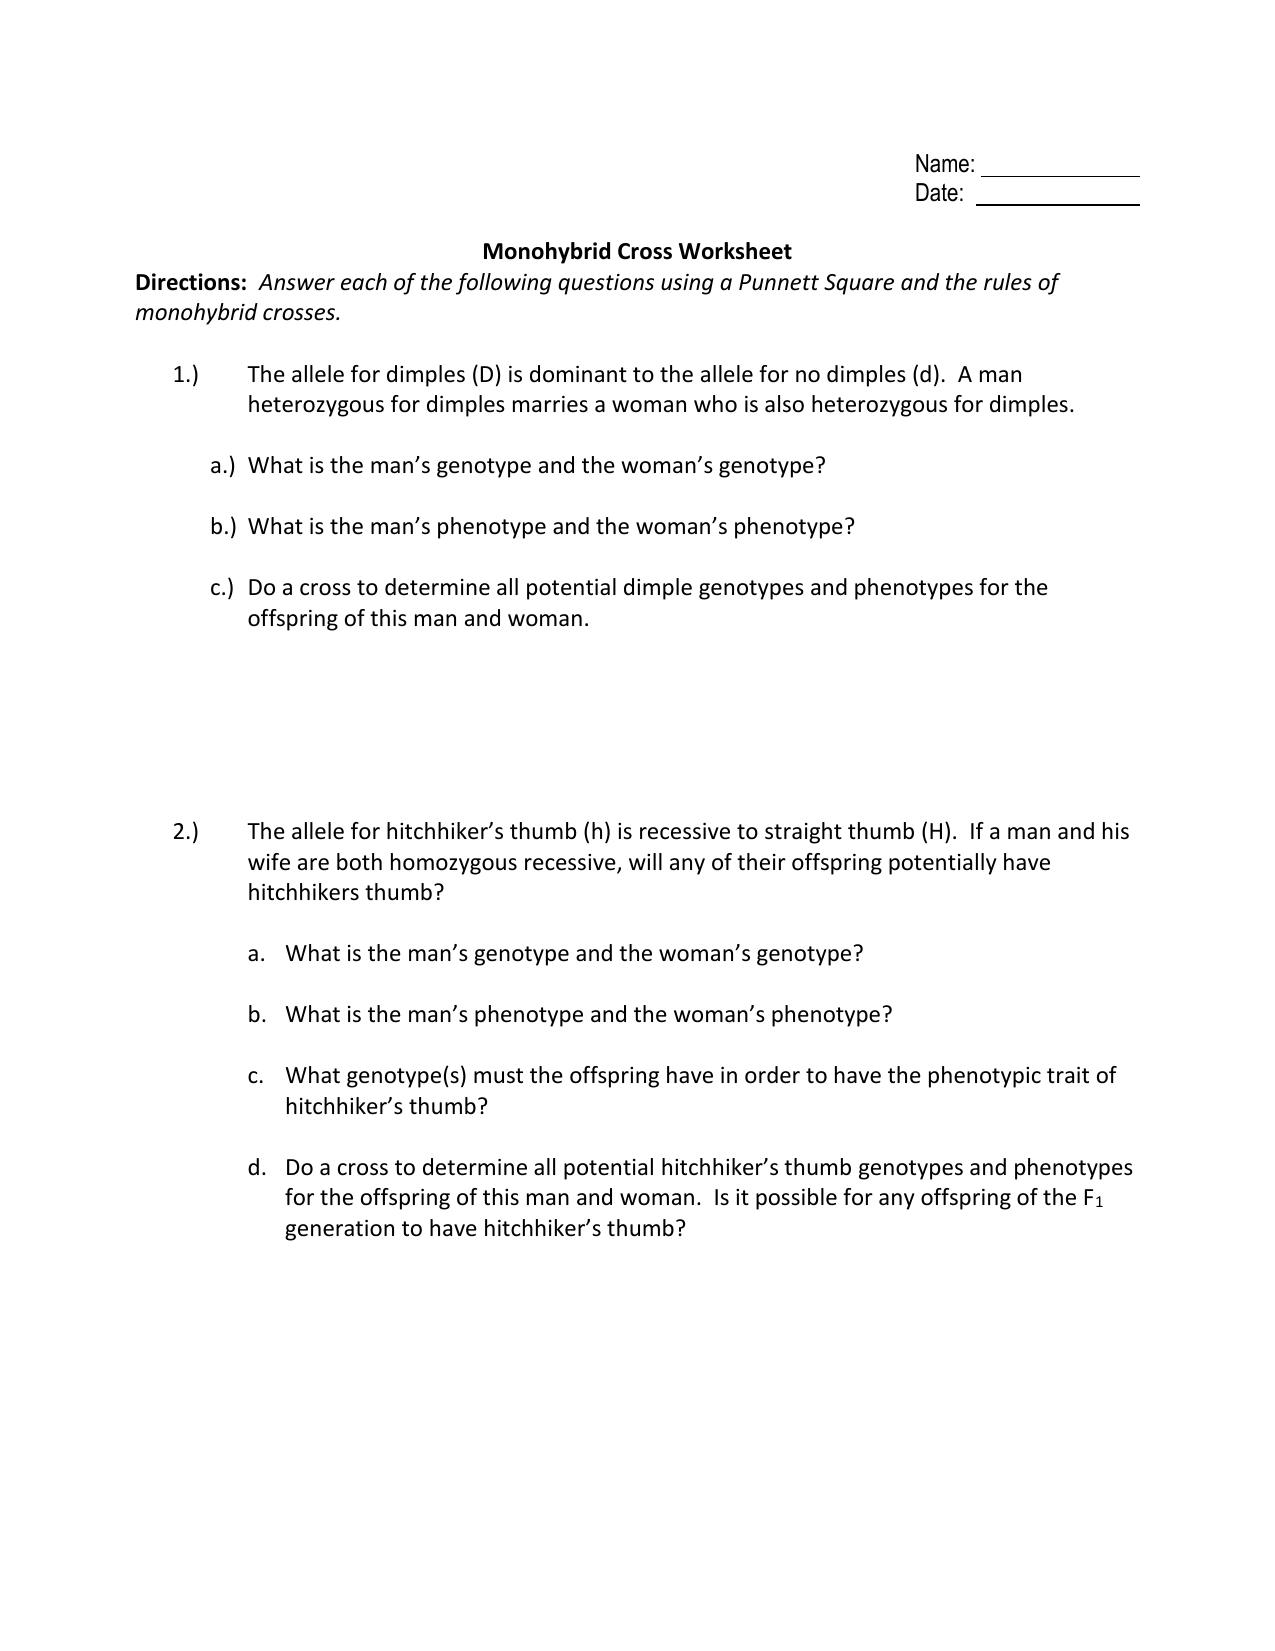 Monohybrid Cross Worksheet Within Monohybrid Cross Worksheet Answers